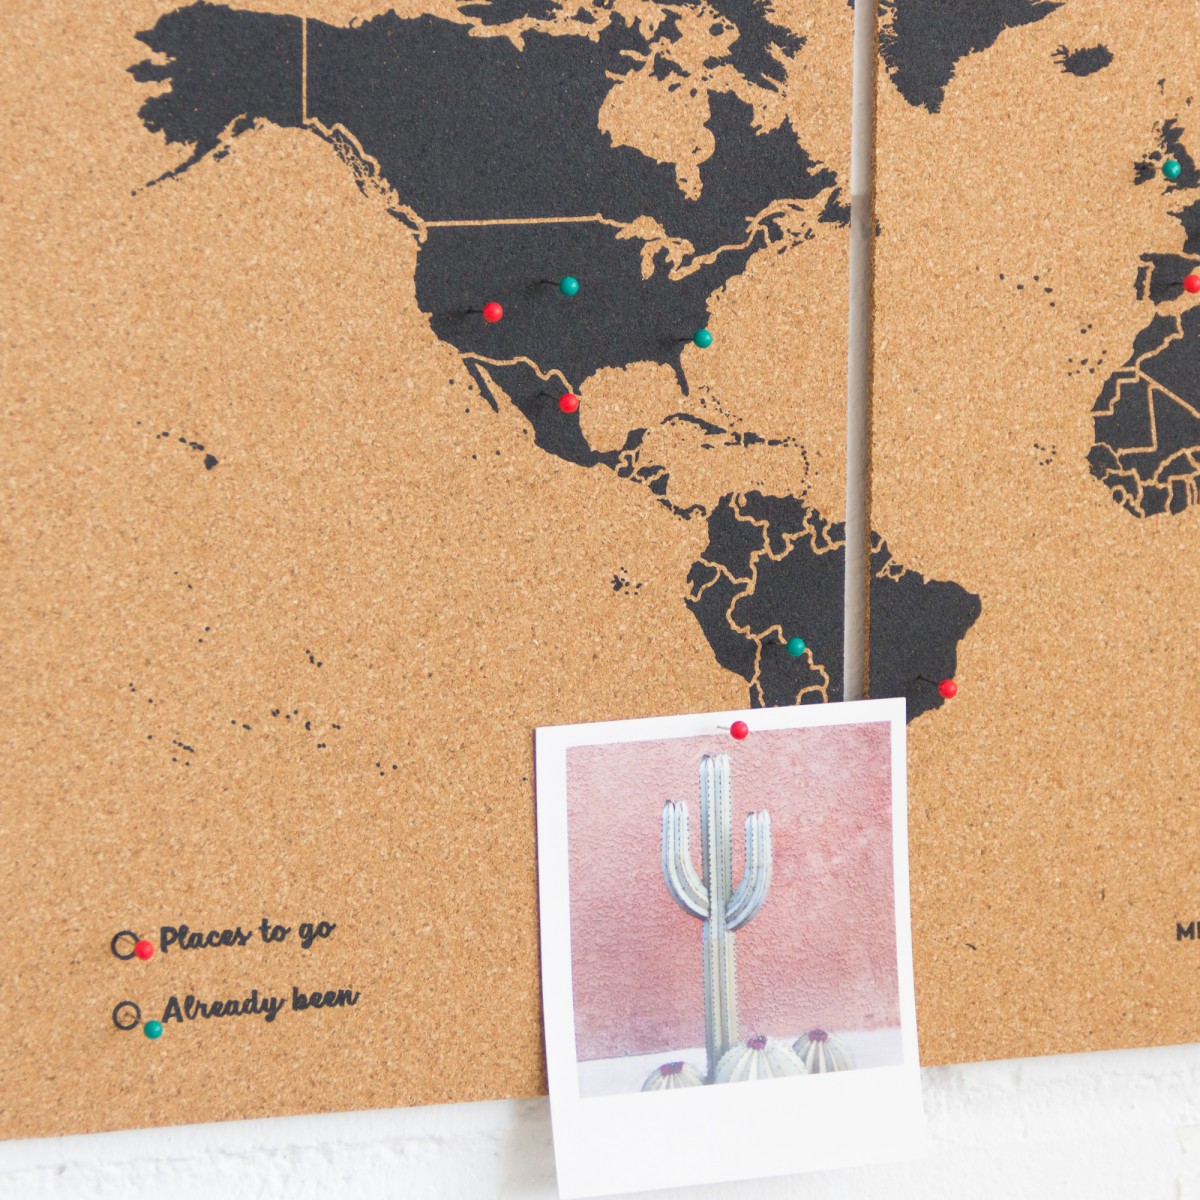 Woody Παγκόσμιος Χάρτης Φελλού Miss Wood - Παζλ  - Μ - Μαύρο